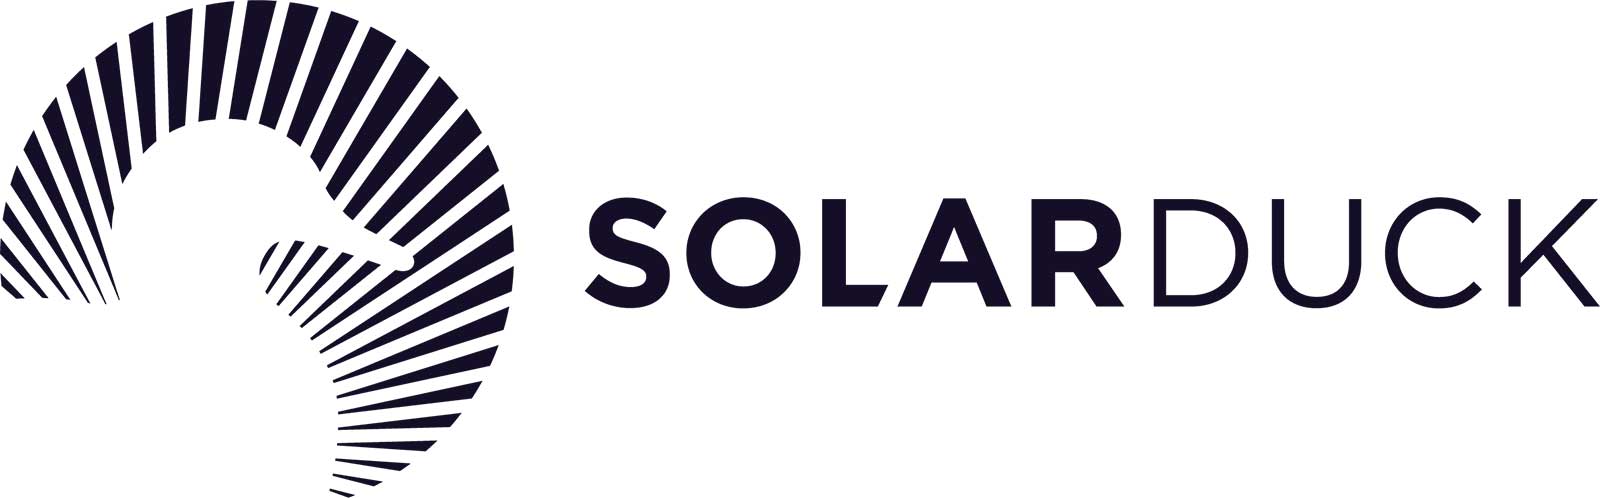 Solar Duck Logo | RWE